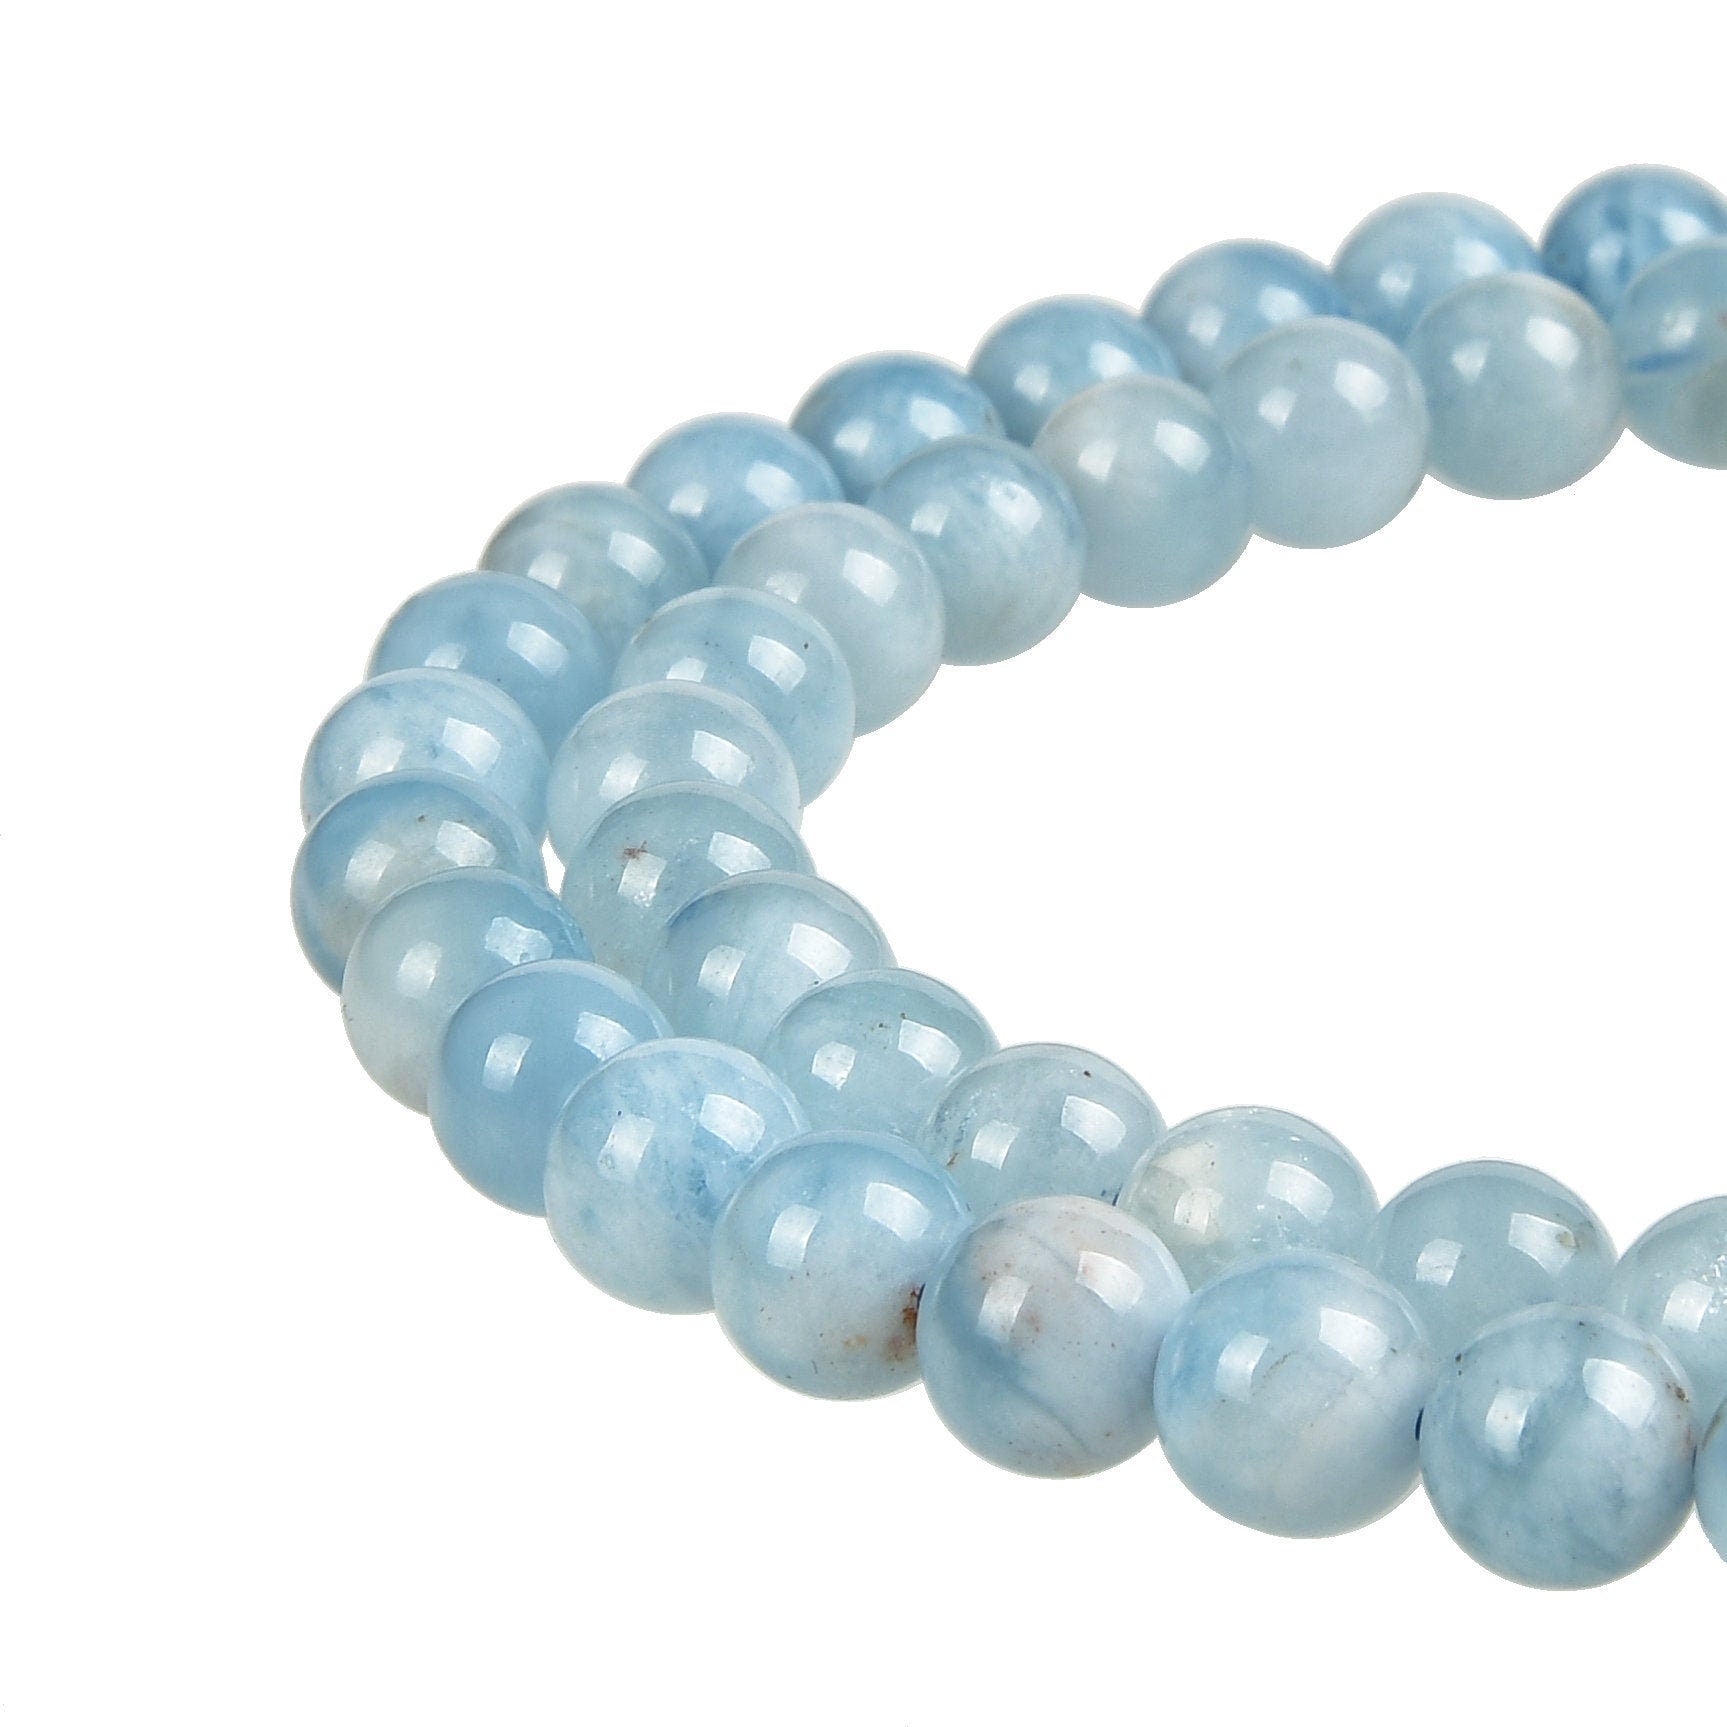 Natural Aquamarine Gemstone Beads- Round, 8mm - In Full 15.5 Inch Long Strand - AAA Quality Bulk order Gemstone Beads